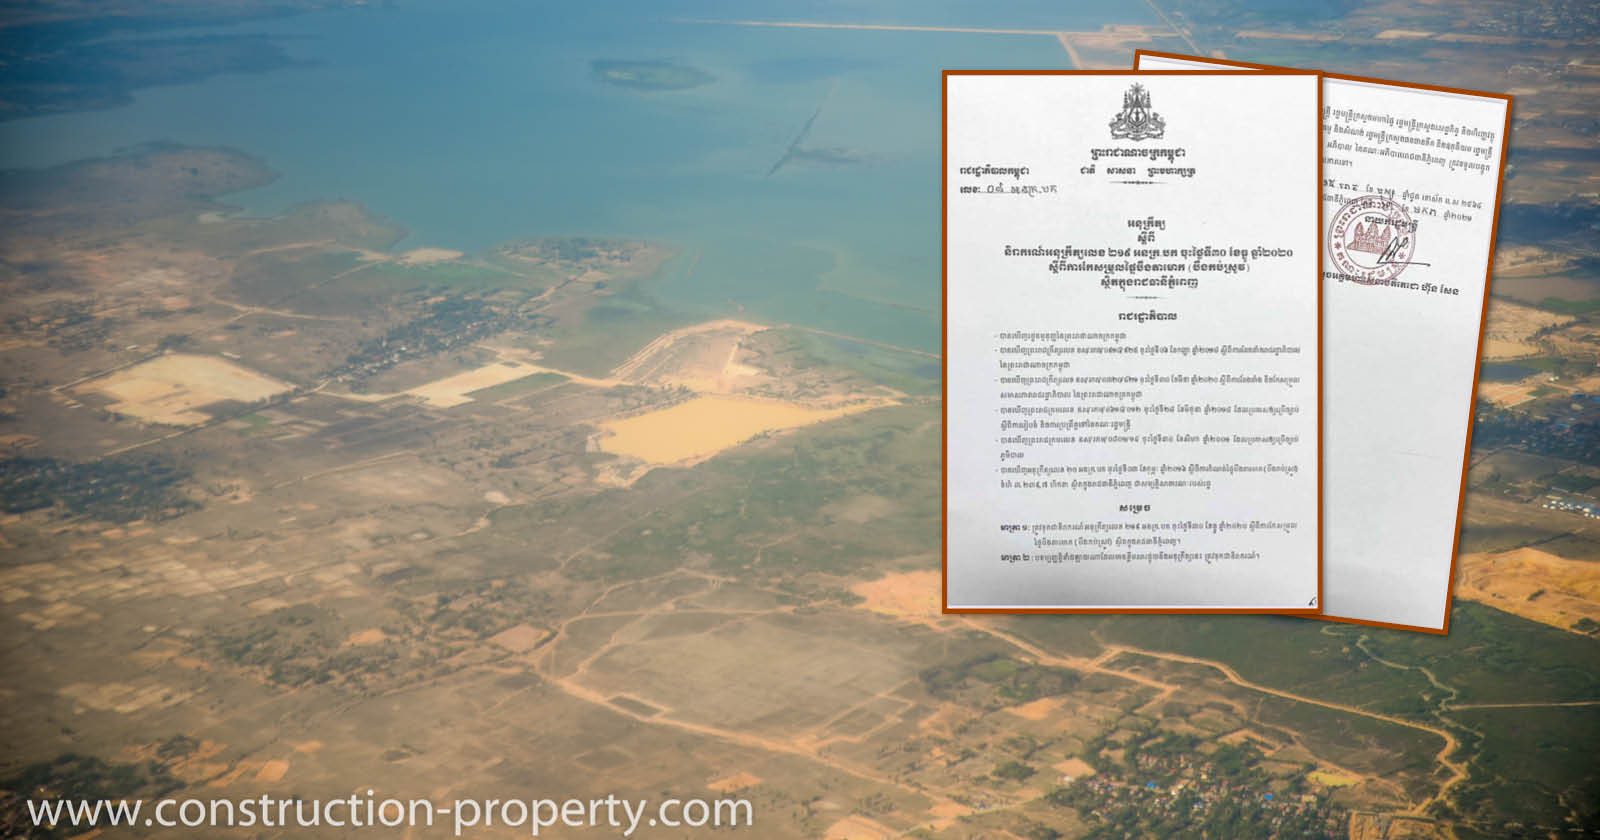 Gov’t Revokes 20-hectare Boeung Ta Mok Land Allocation and Cancels Construction of Sub Military Headquarters